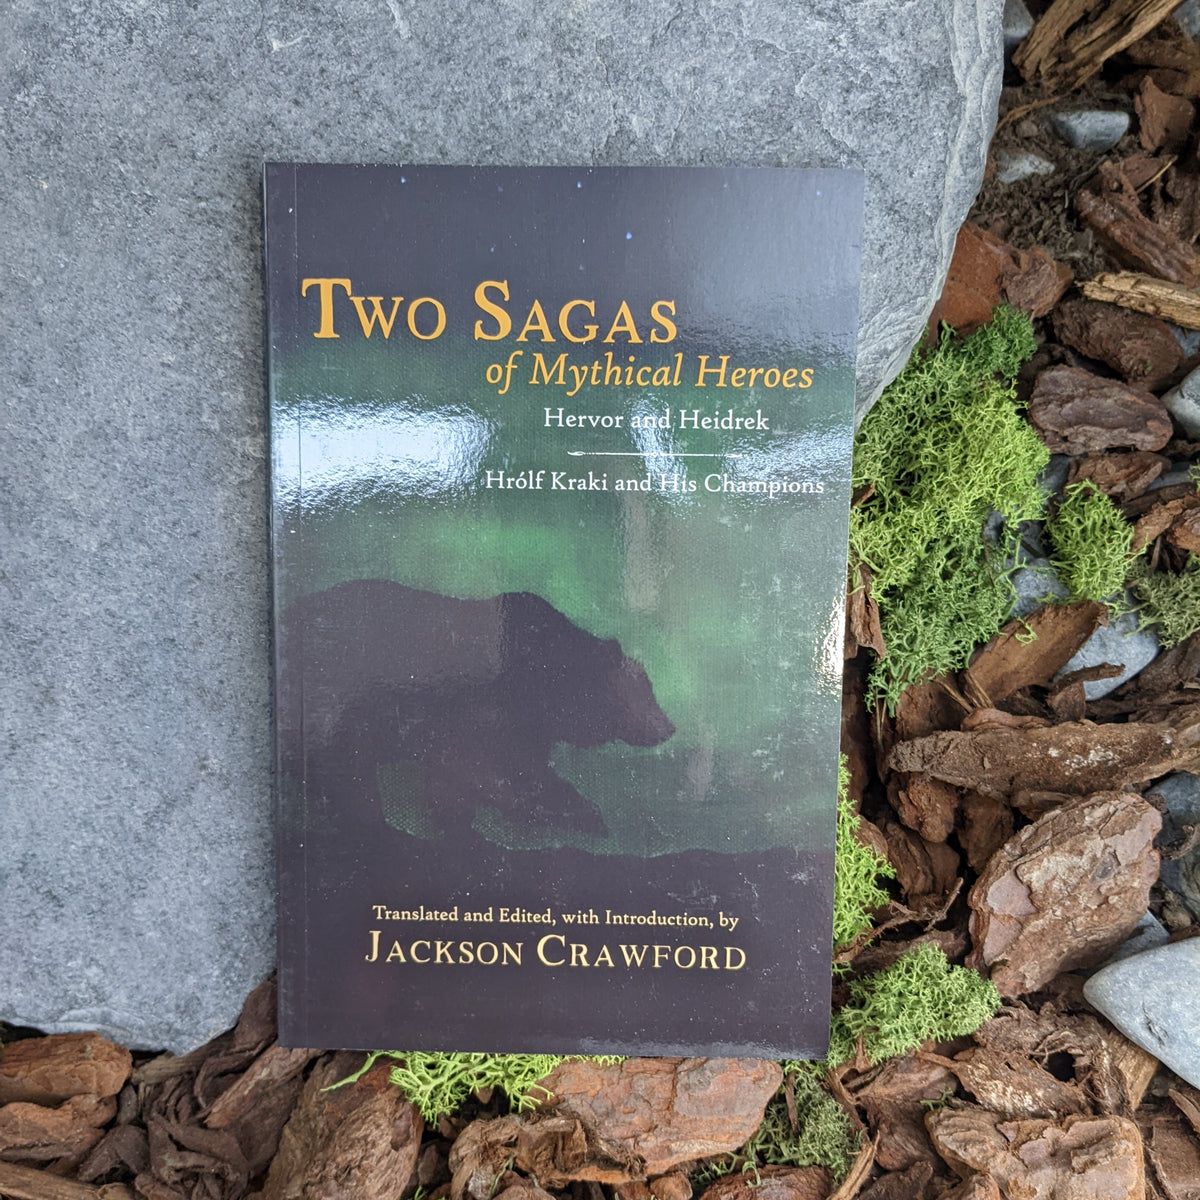 Two Sagas of Mythical Heroes, Hervor and Heidrek